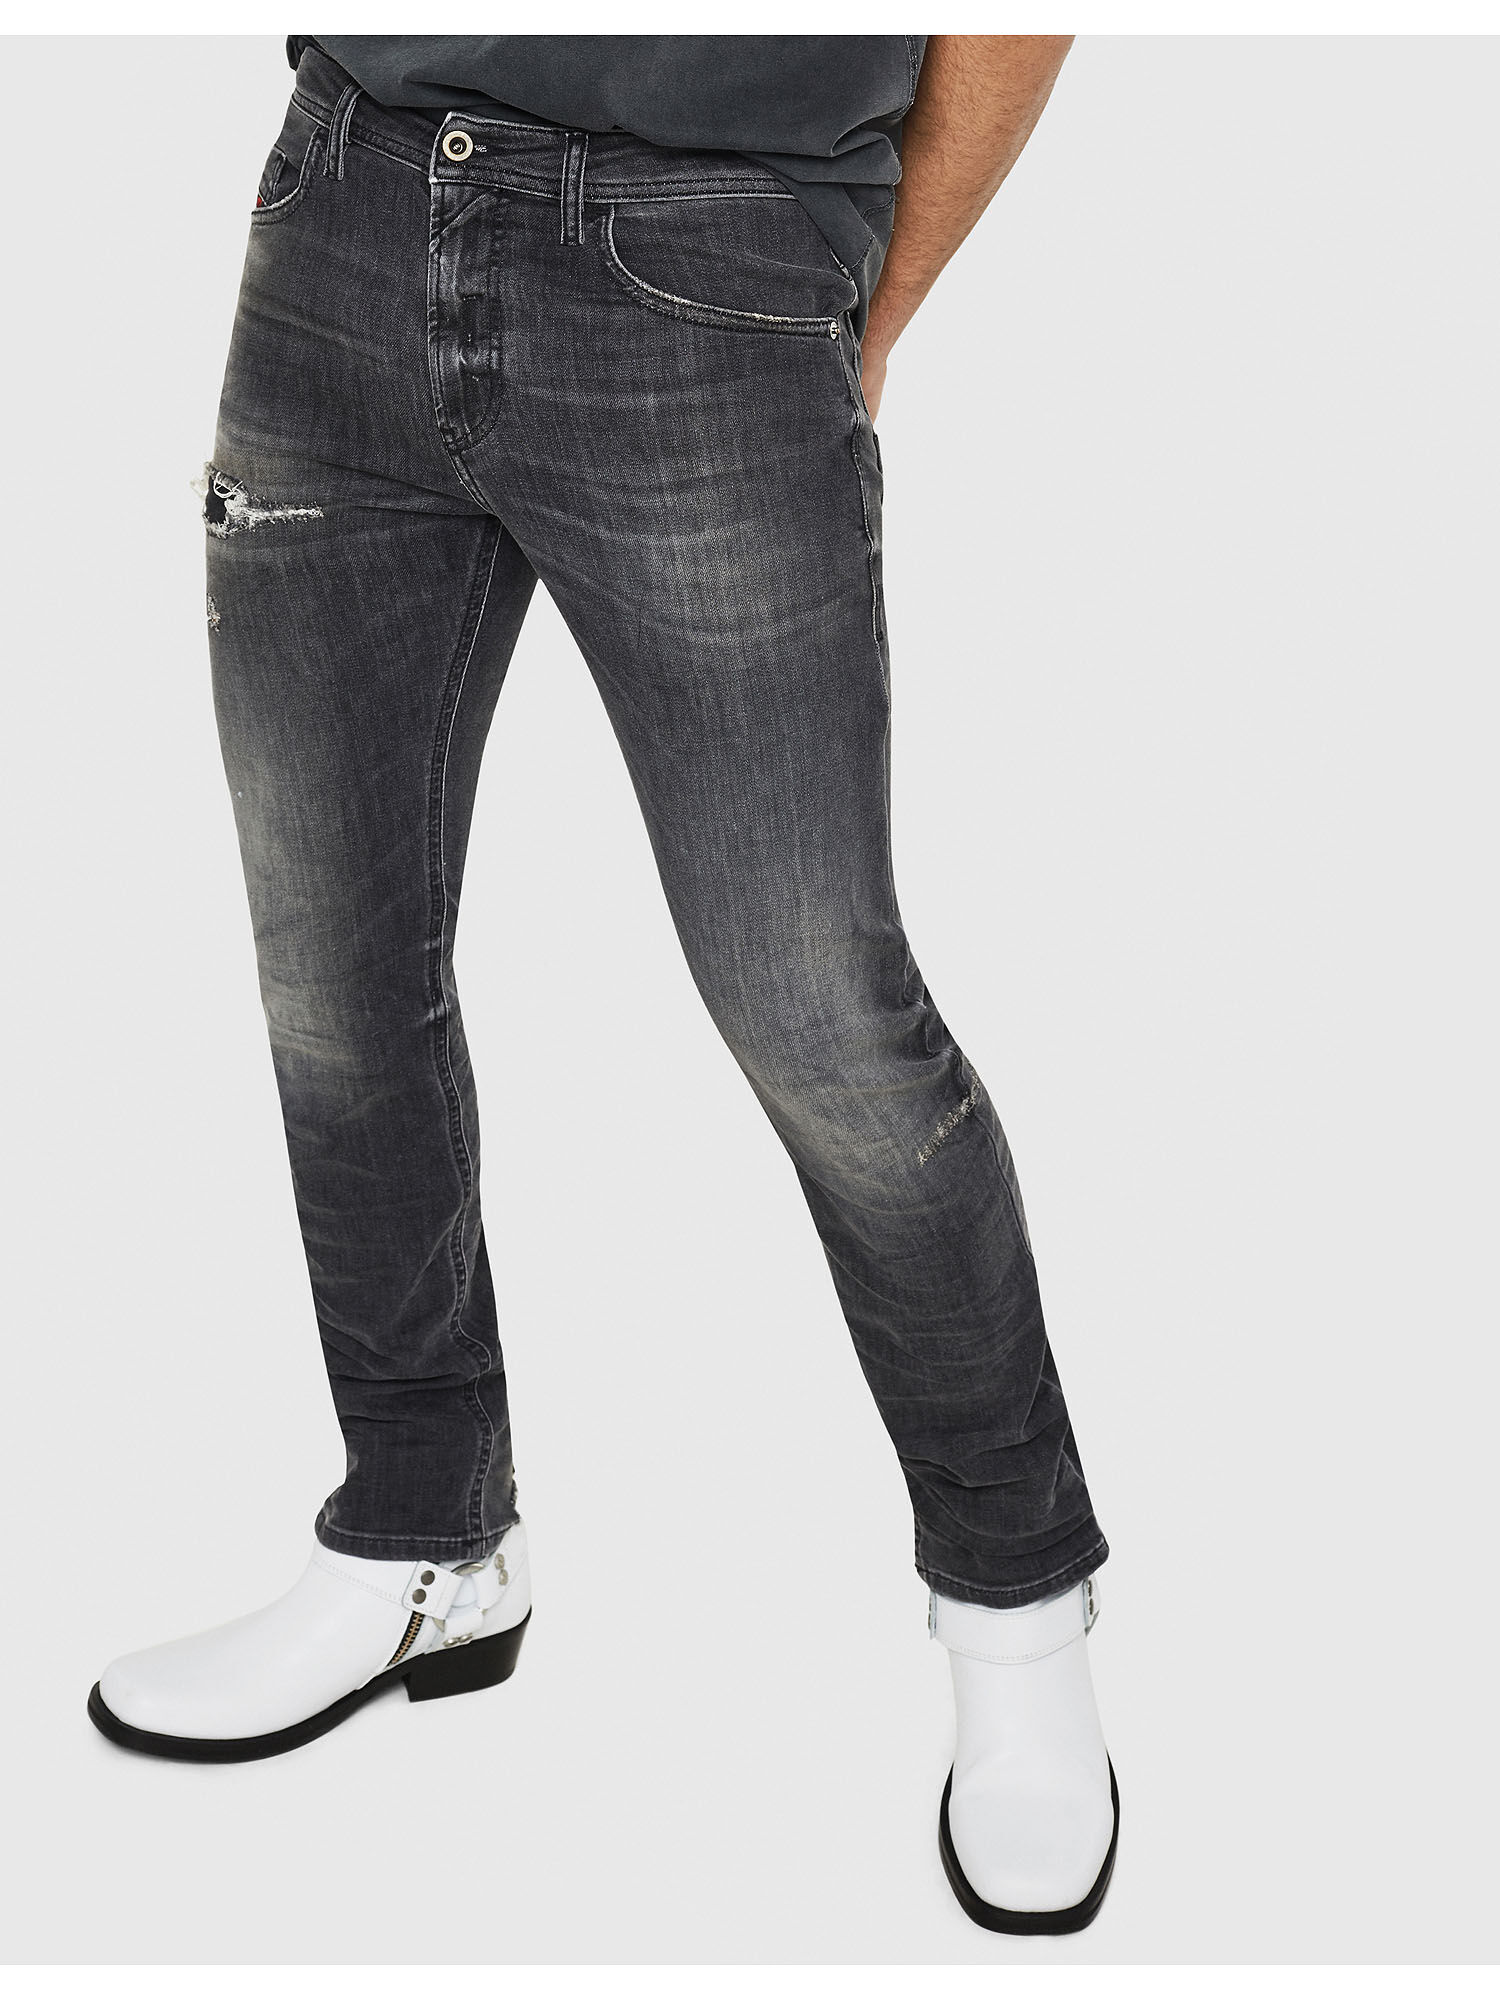 gloria vanderbilt jeans women's size